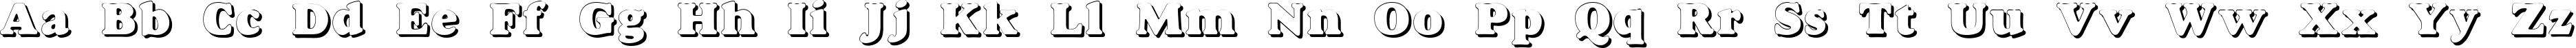 Пример написания английского алфавита шрифтом Dover Shadow